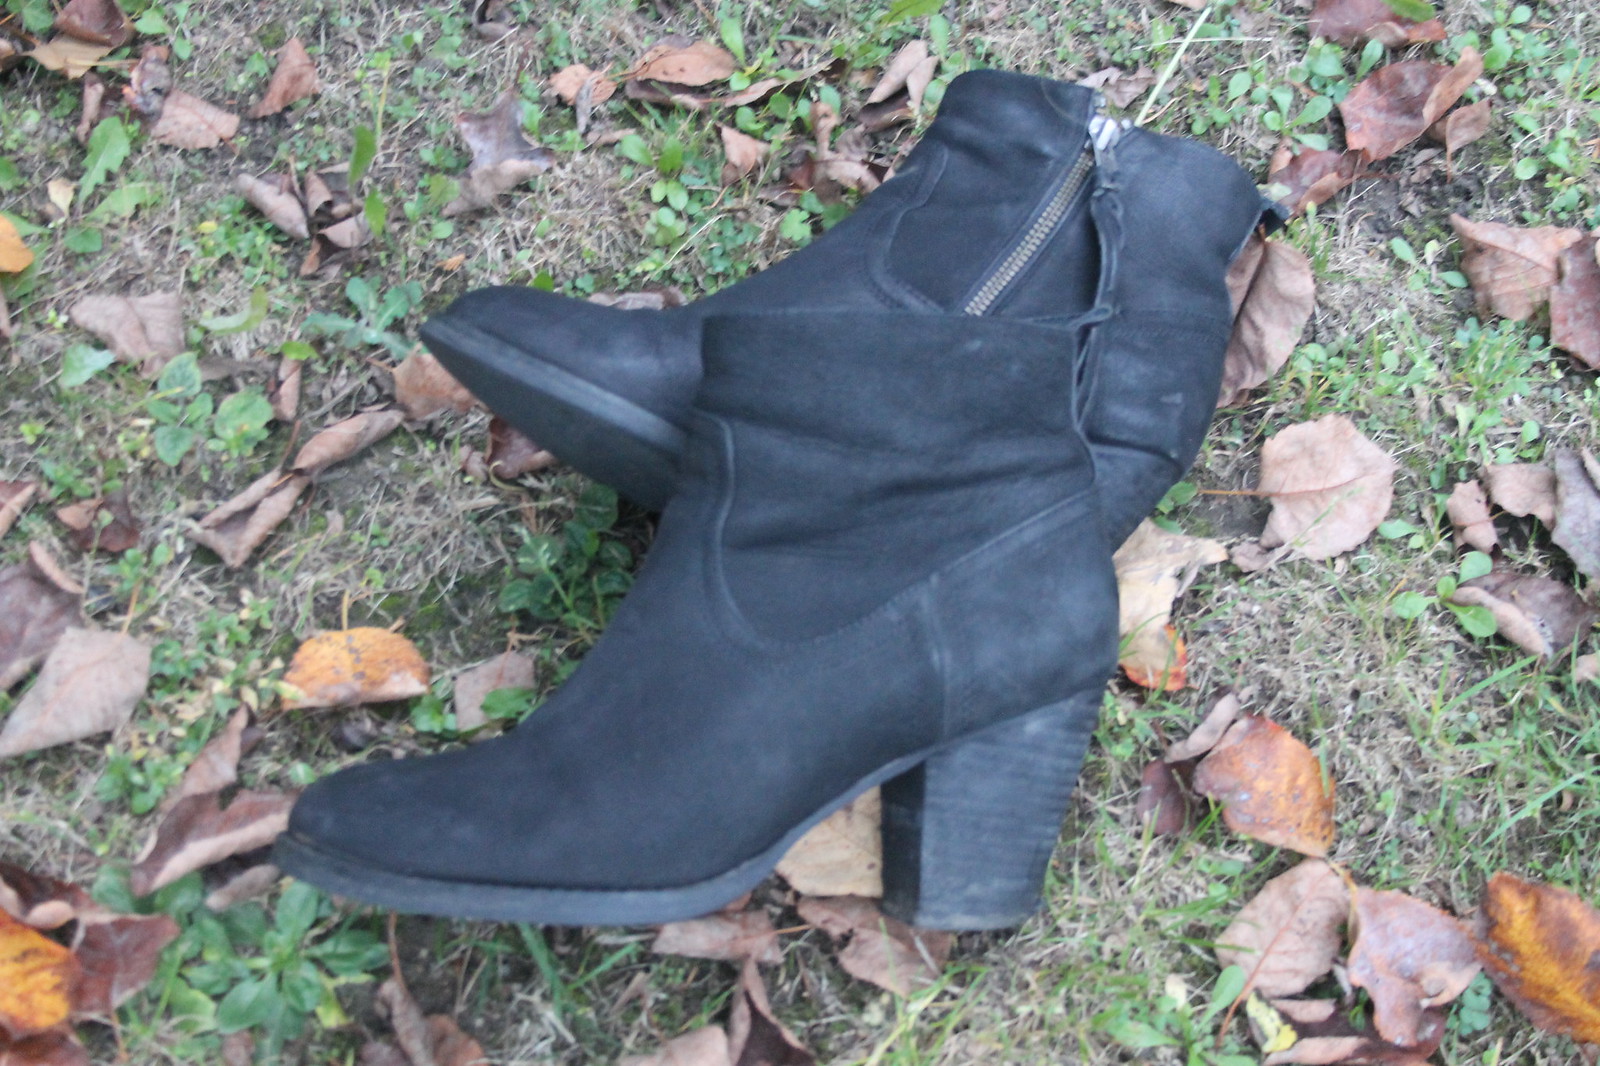 buffalo-boots-stiefeletten-schwarz-herbst-trend-outfit-fashionblog